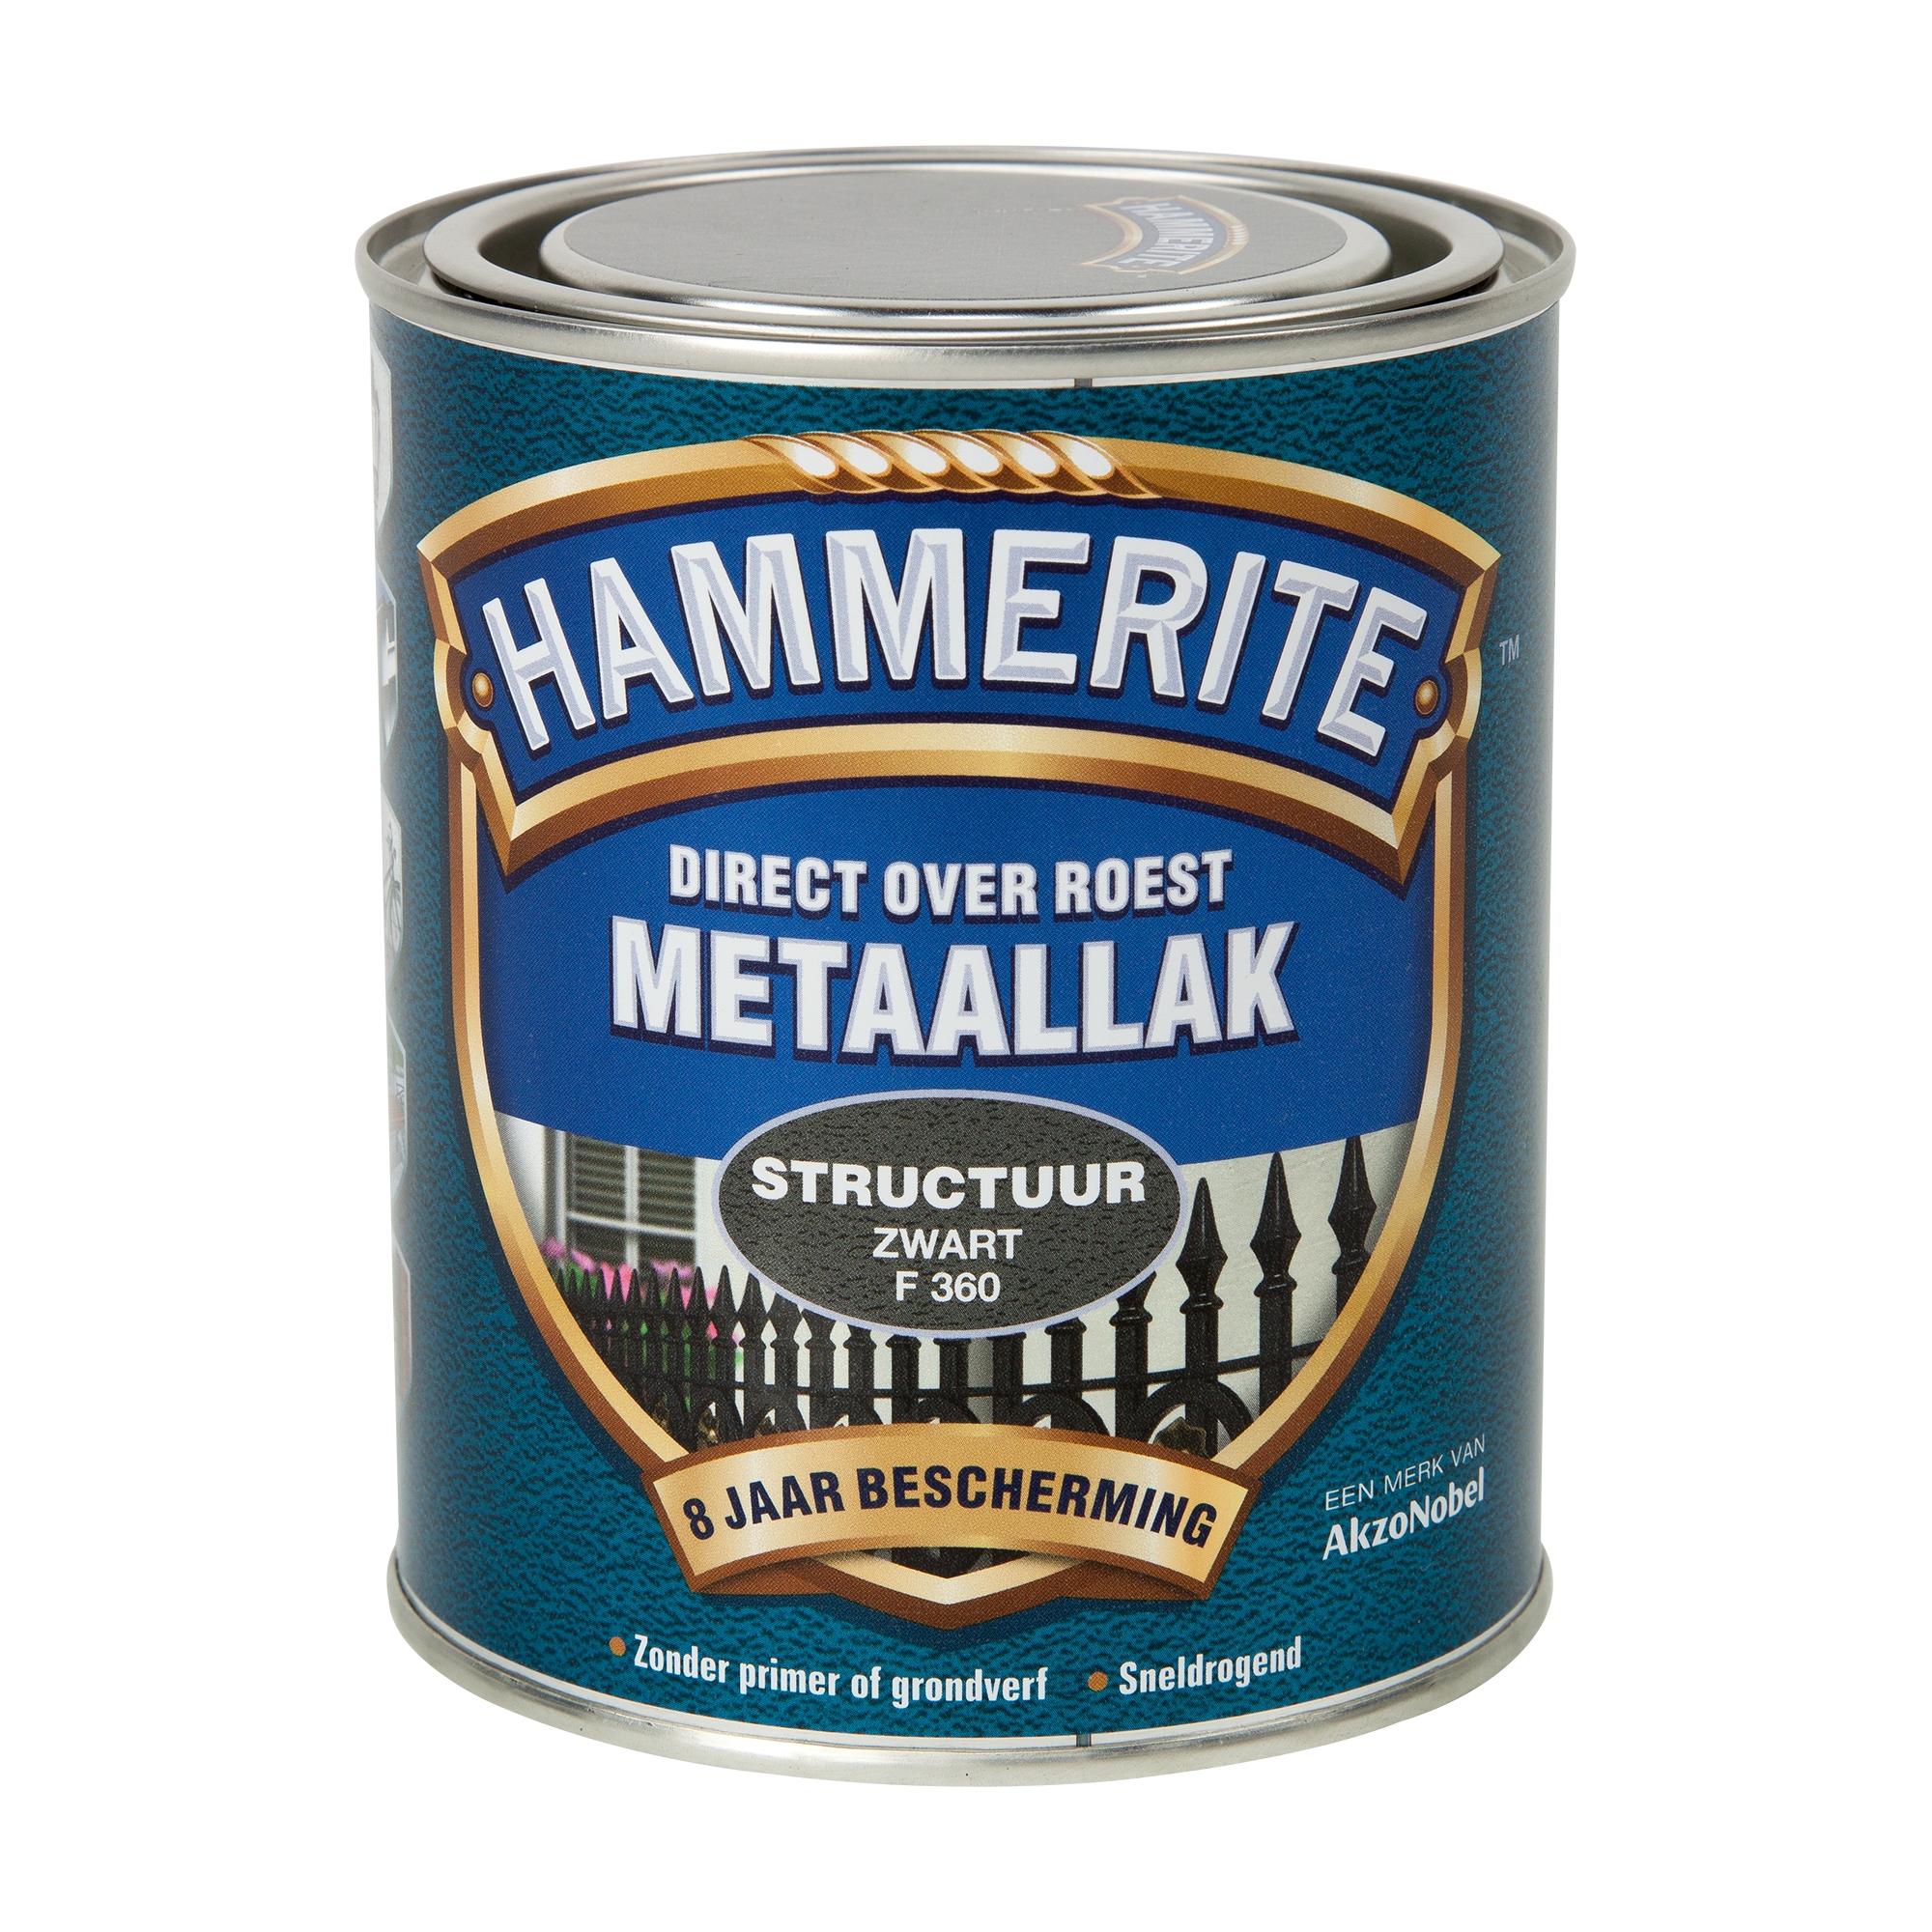 moord Mening koper Hammerite Metaallak Structuur - #1 in Metaalverf | Hammerite